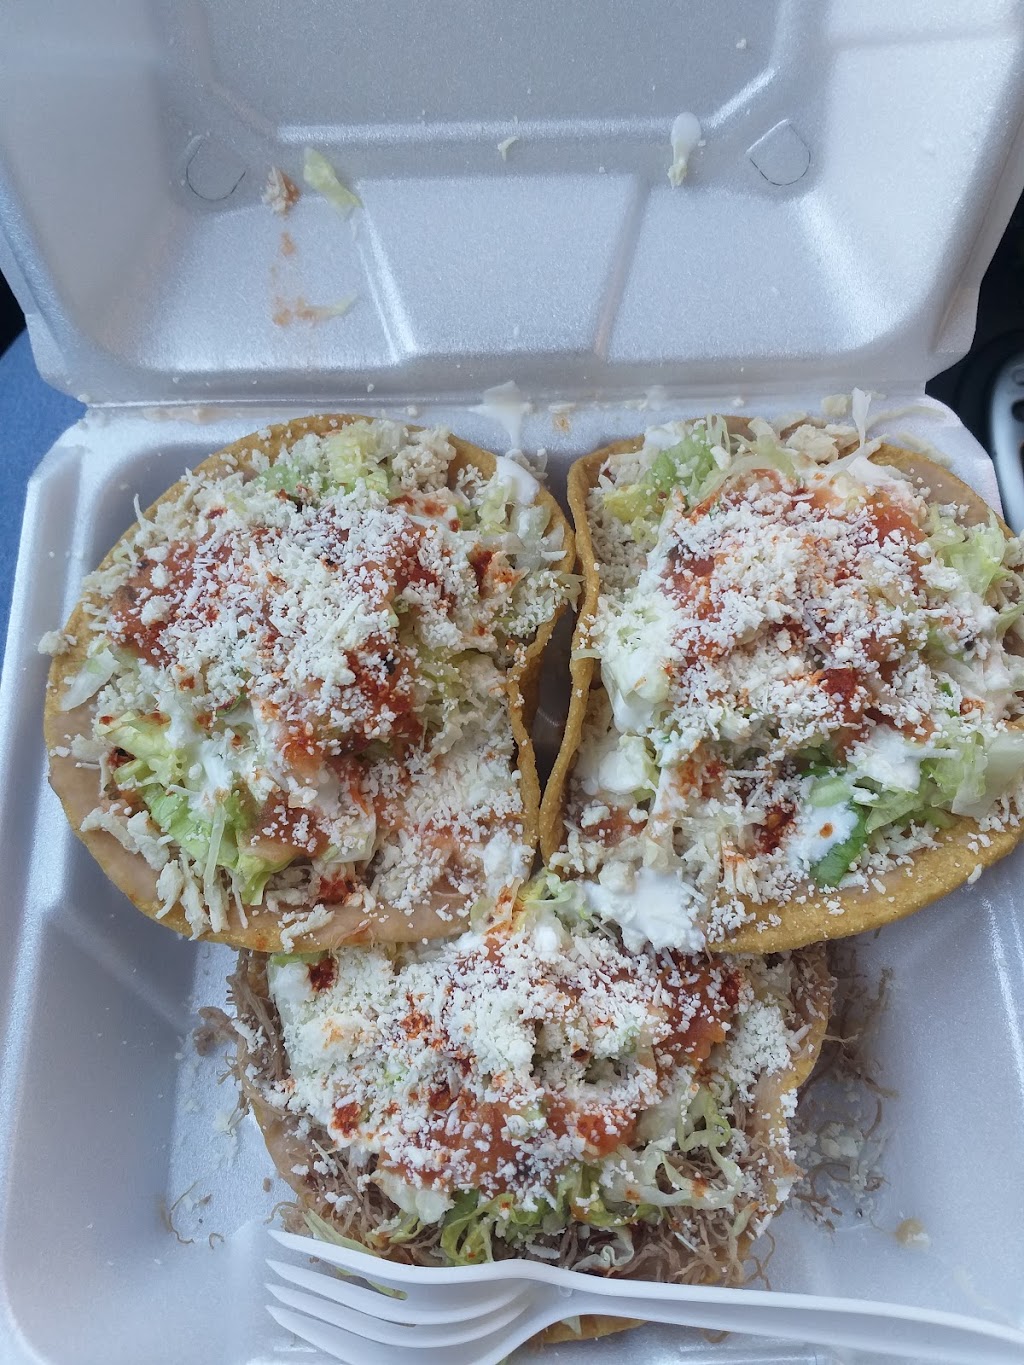 Fritangas Food Truck | Bahía Cristóbal, Blvd. el Mirador, El Mirador, 22520 Tijuana, B.C., Mexico | Phone: 664 508 6837